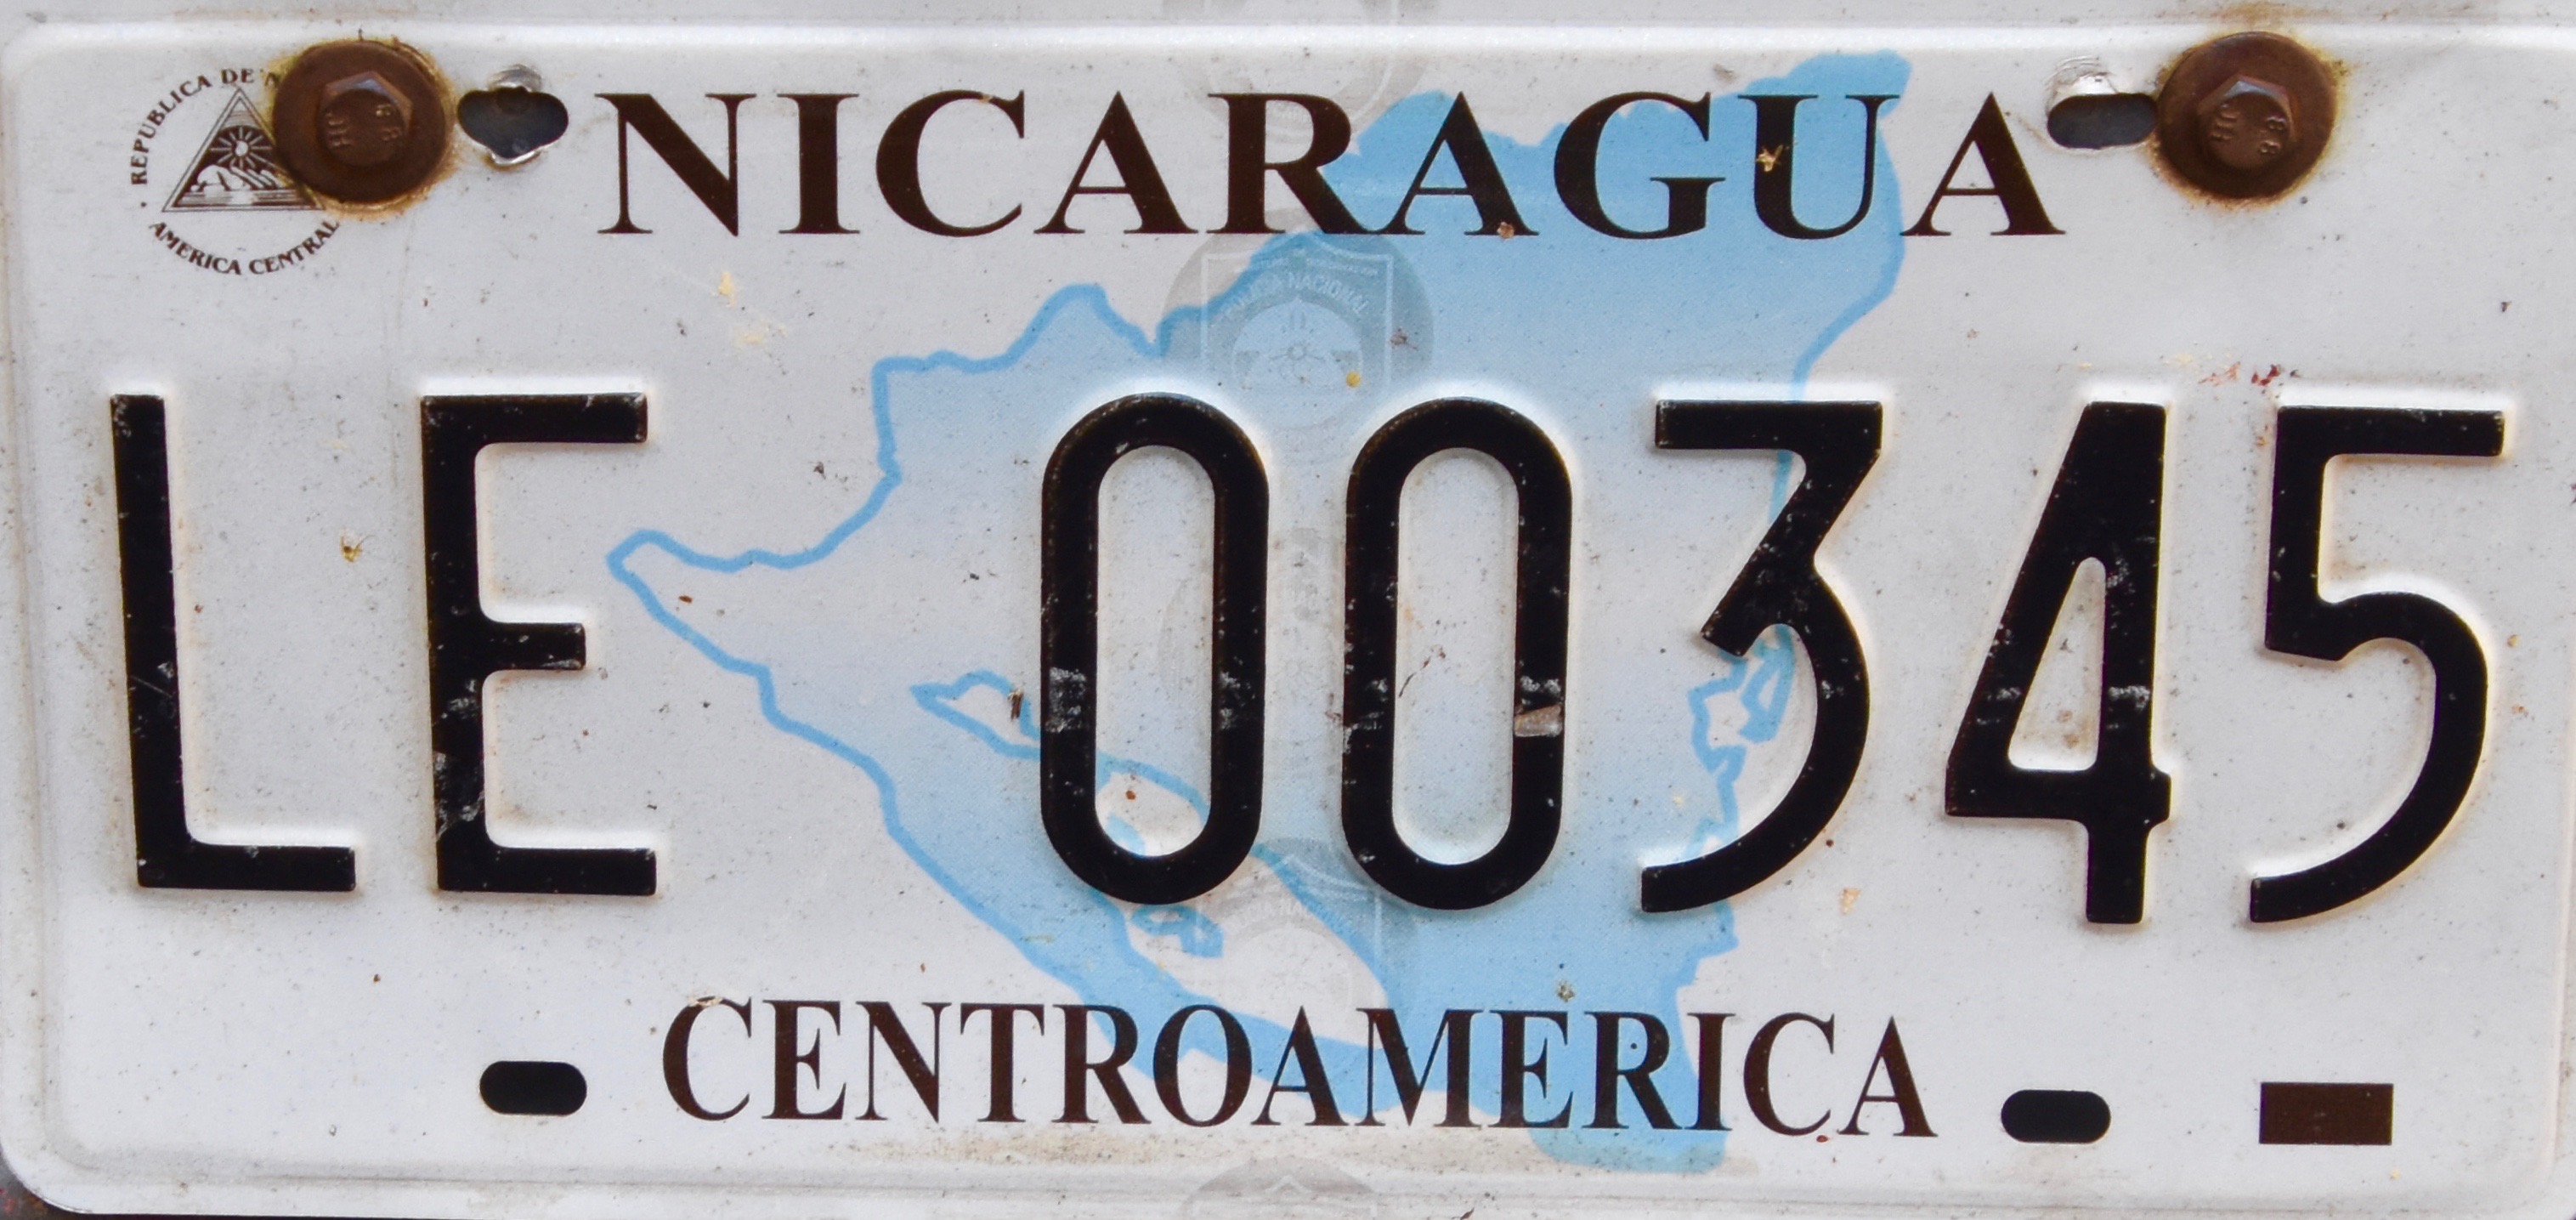 License Plate of Nicaragua